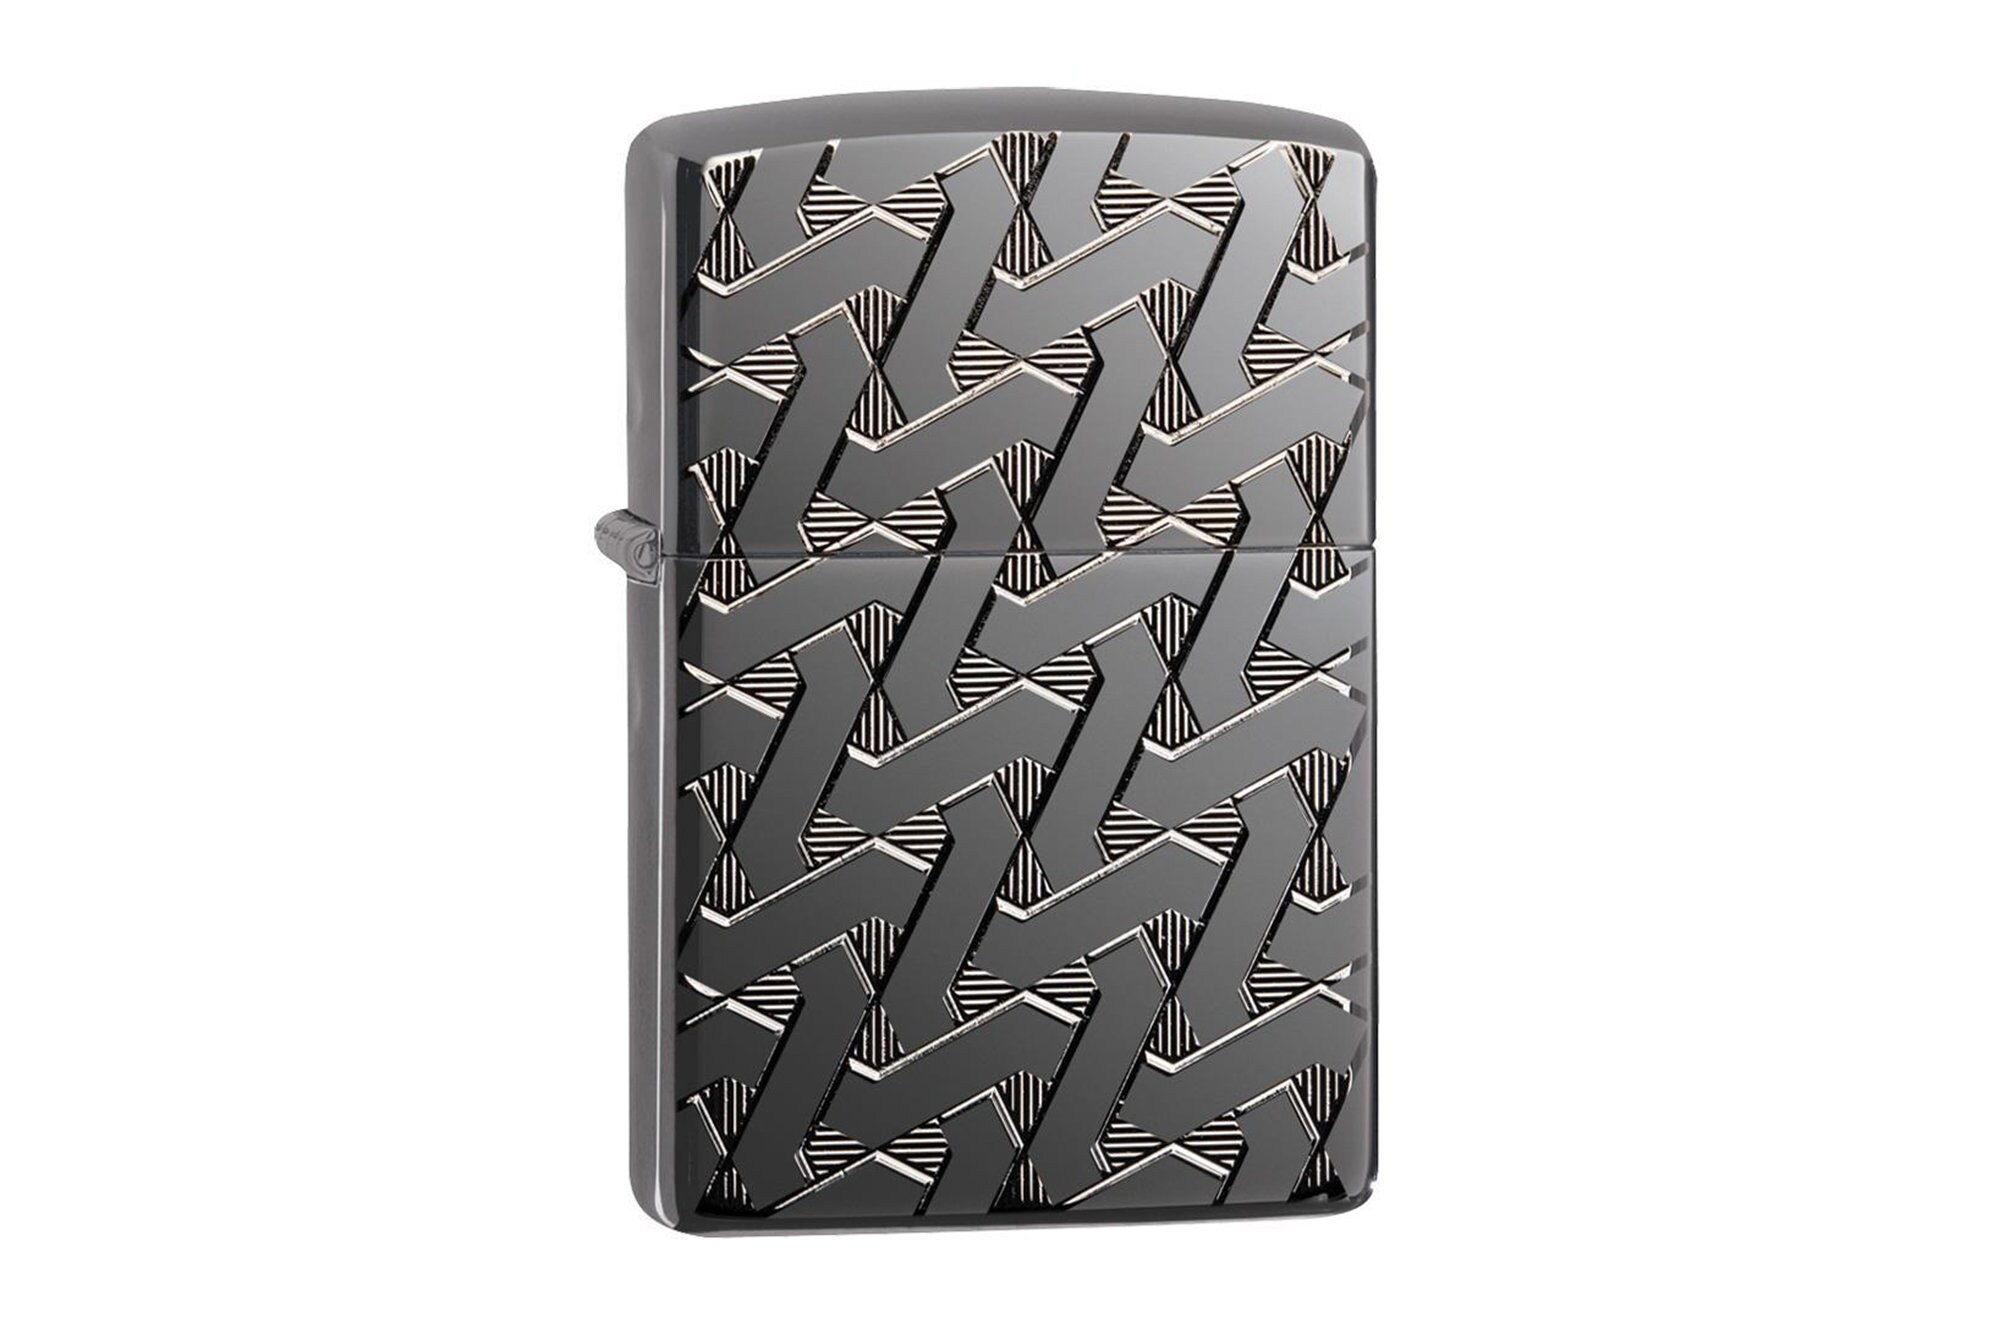 Zippo Armor Black Ice Geometric Weave Design Lighter